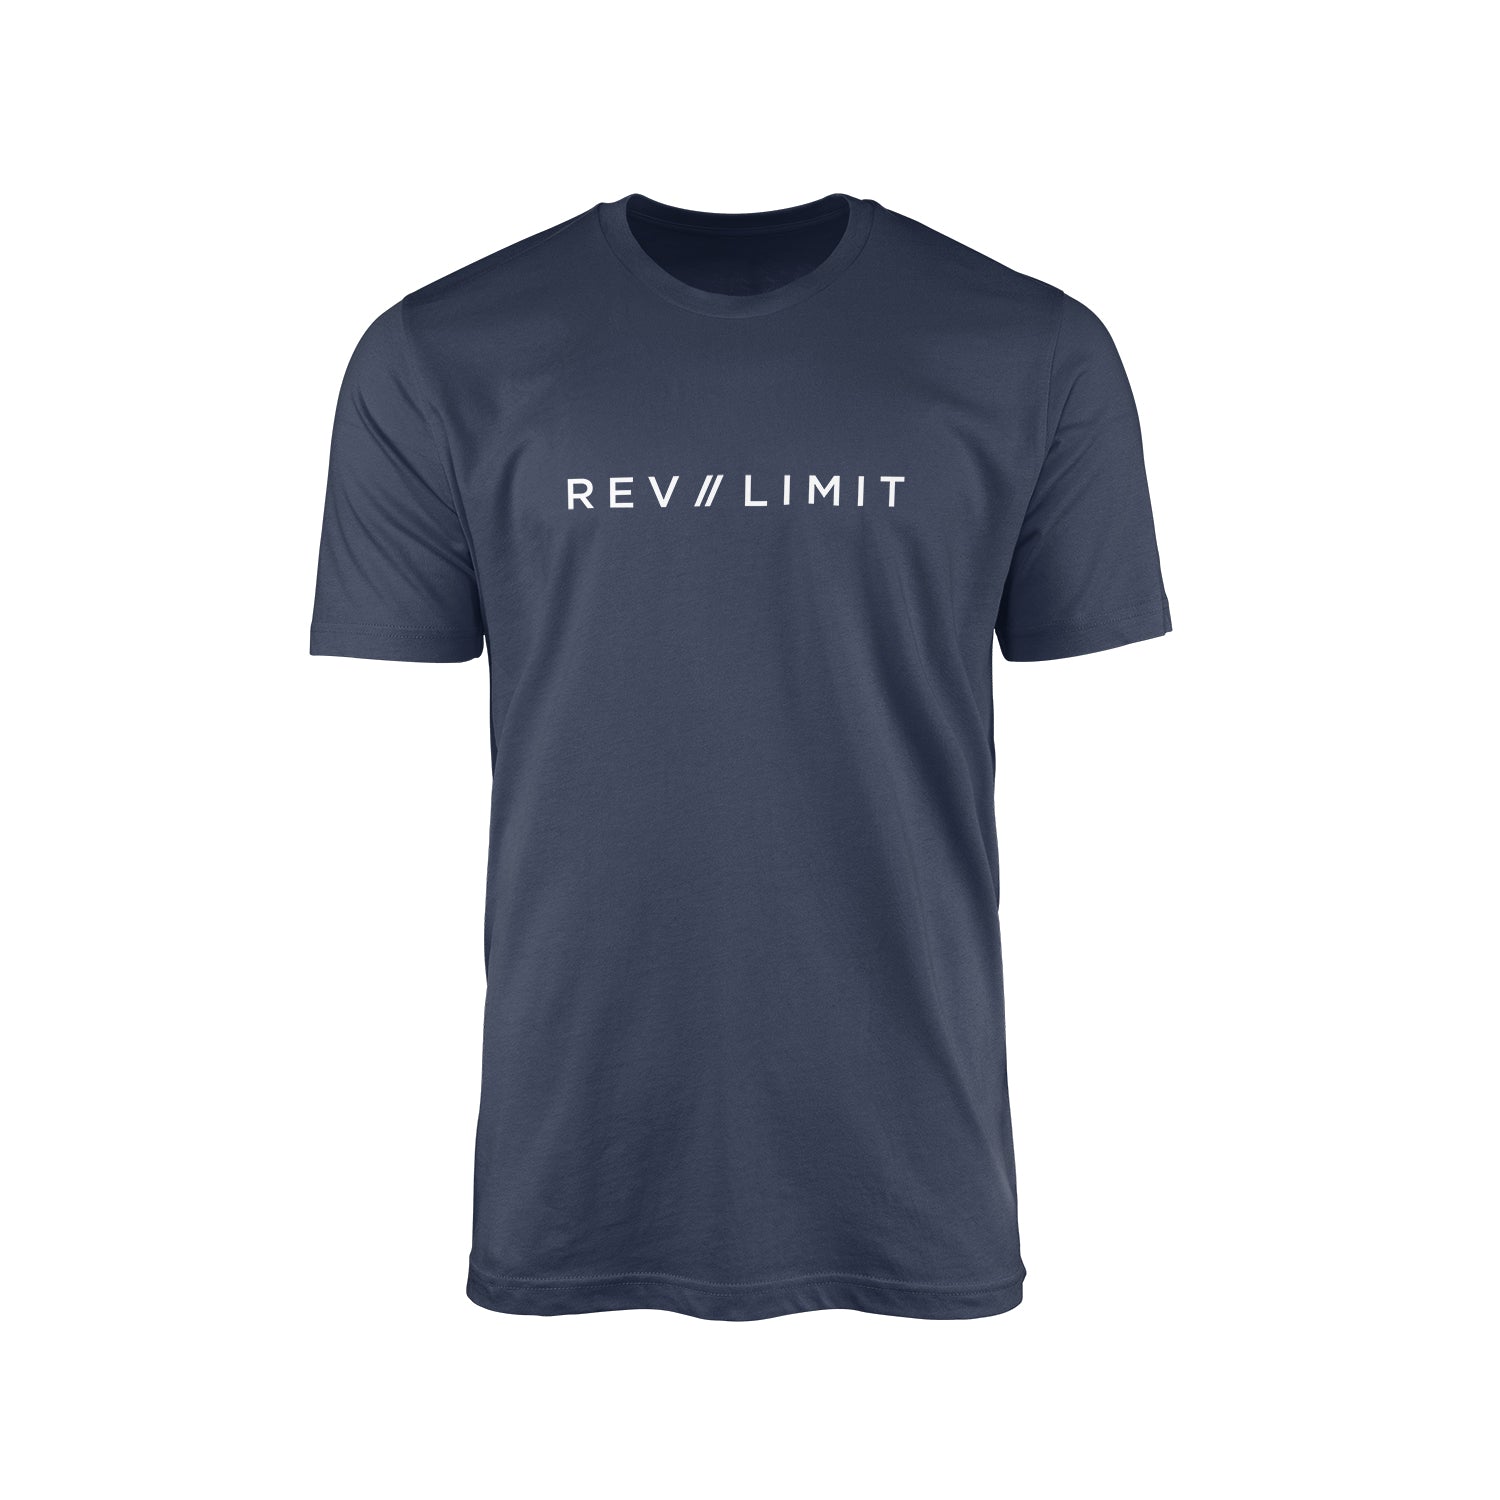 Rev Limit Clothing Company, Shopify Store Listing